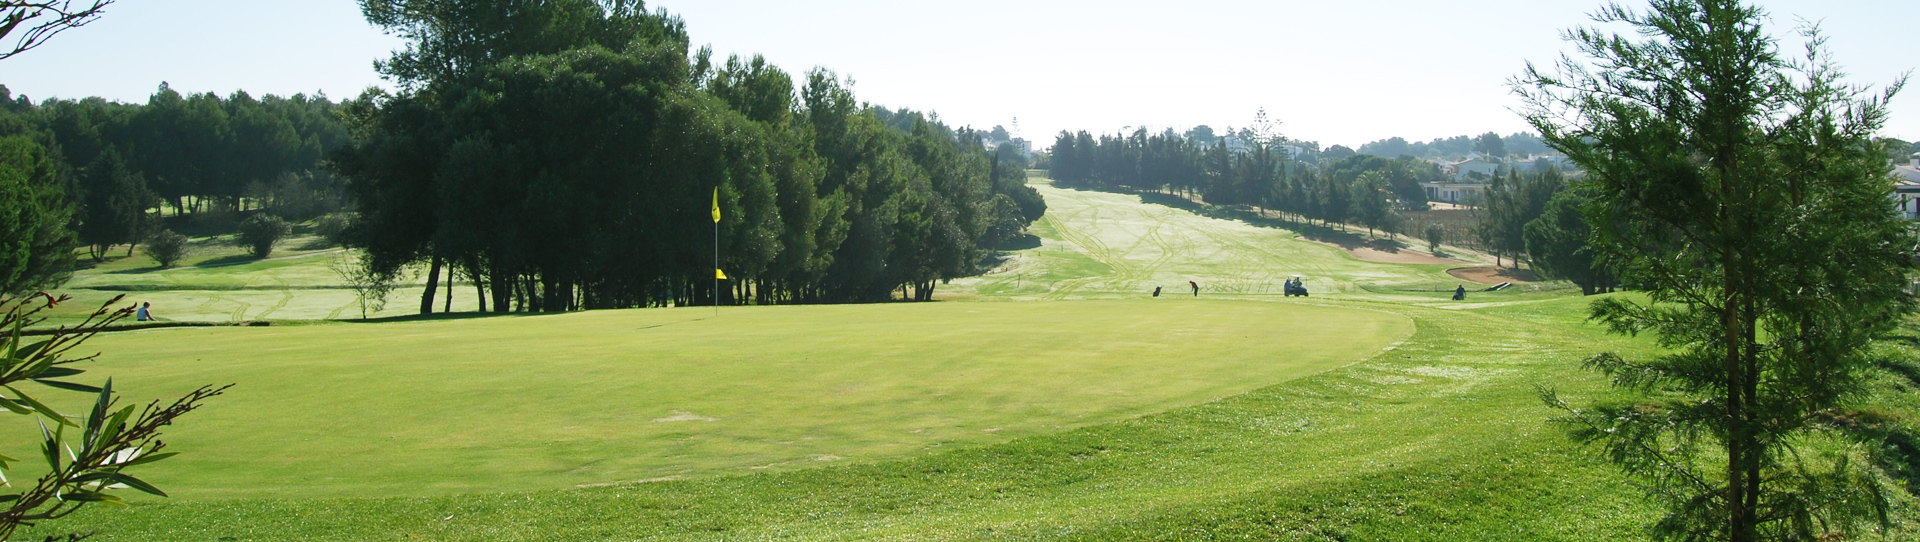 Portugal golf courses - Alto Golf Course - Photo 3